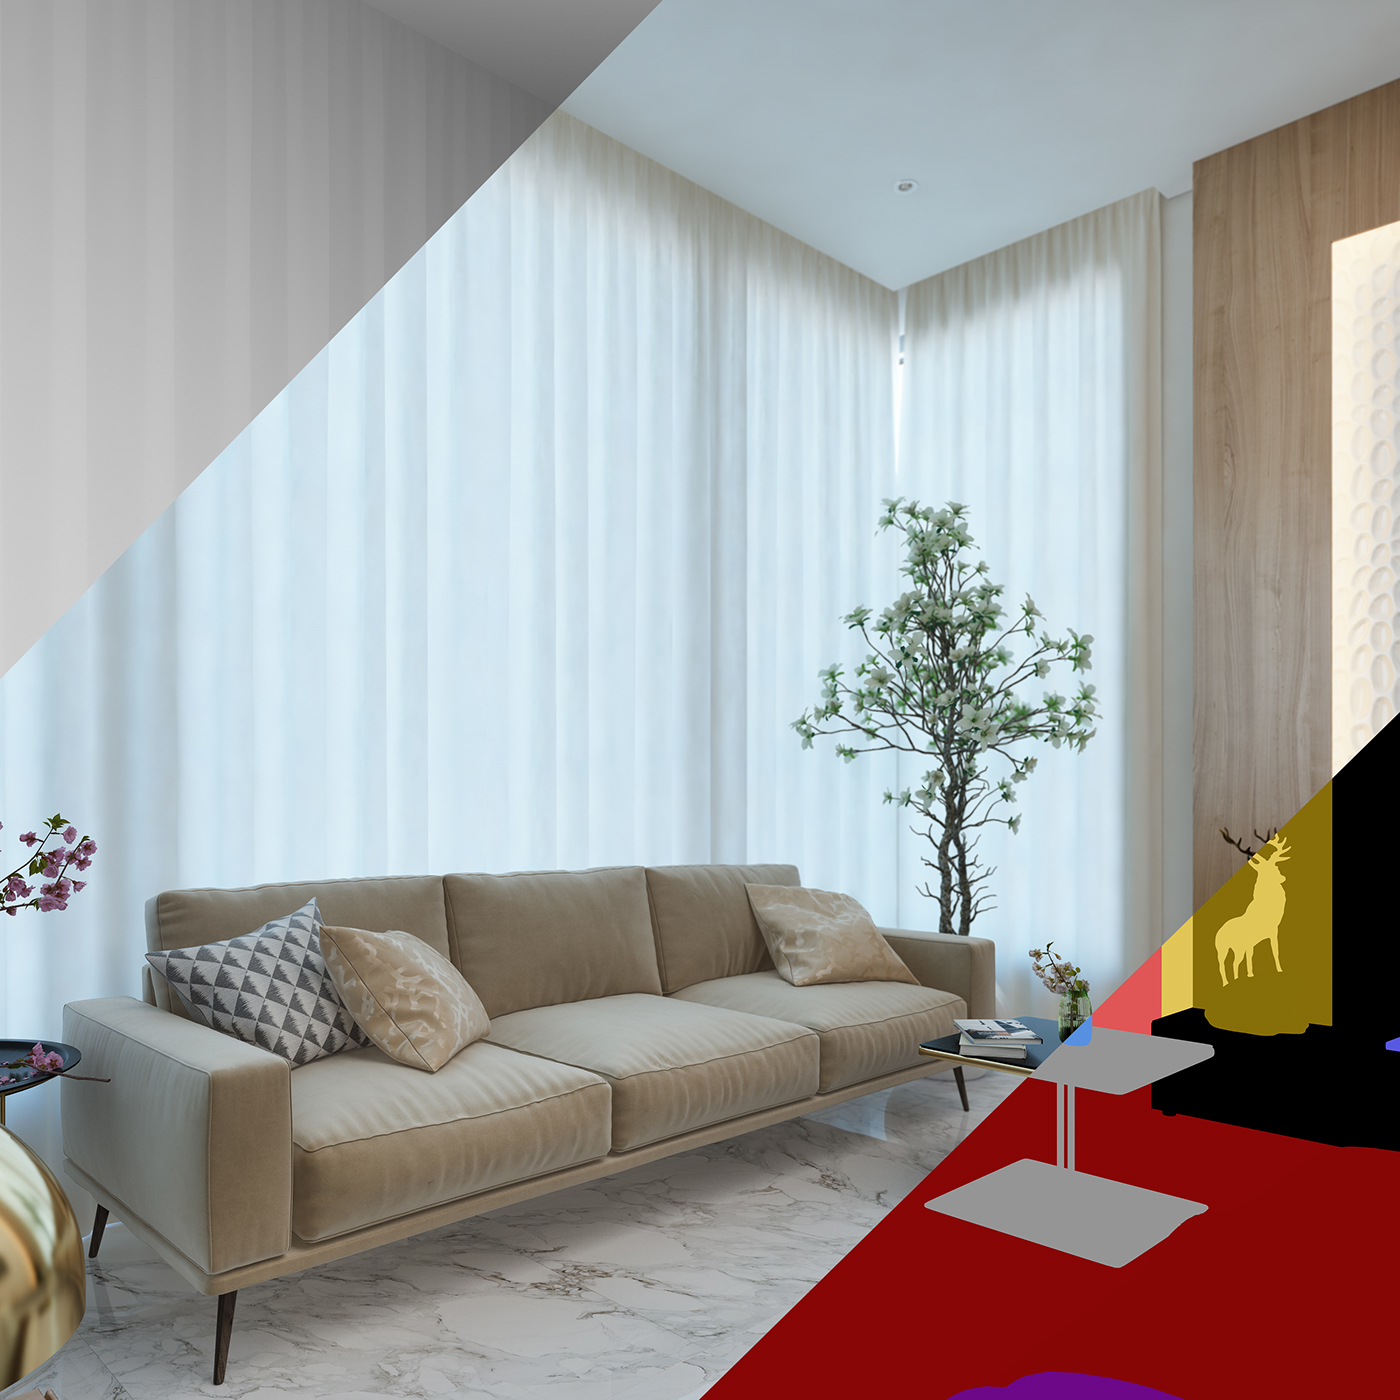 3dsmax vray Interior dubai photoshop bedroom modern interior design  Render 3D